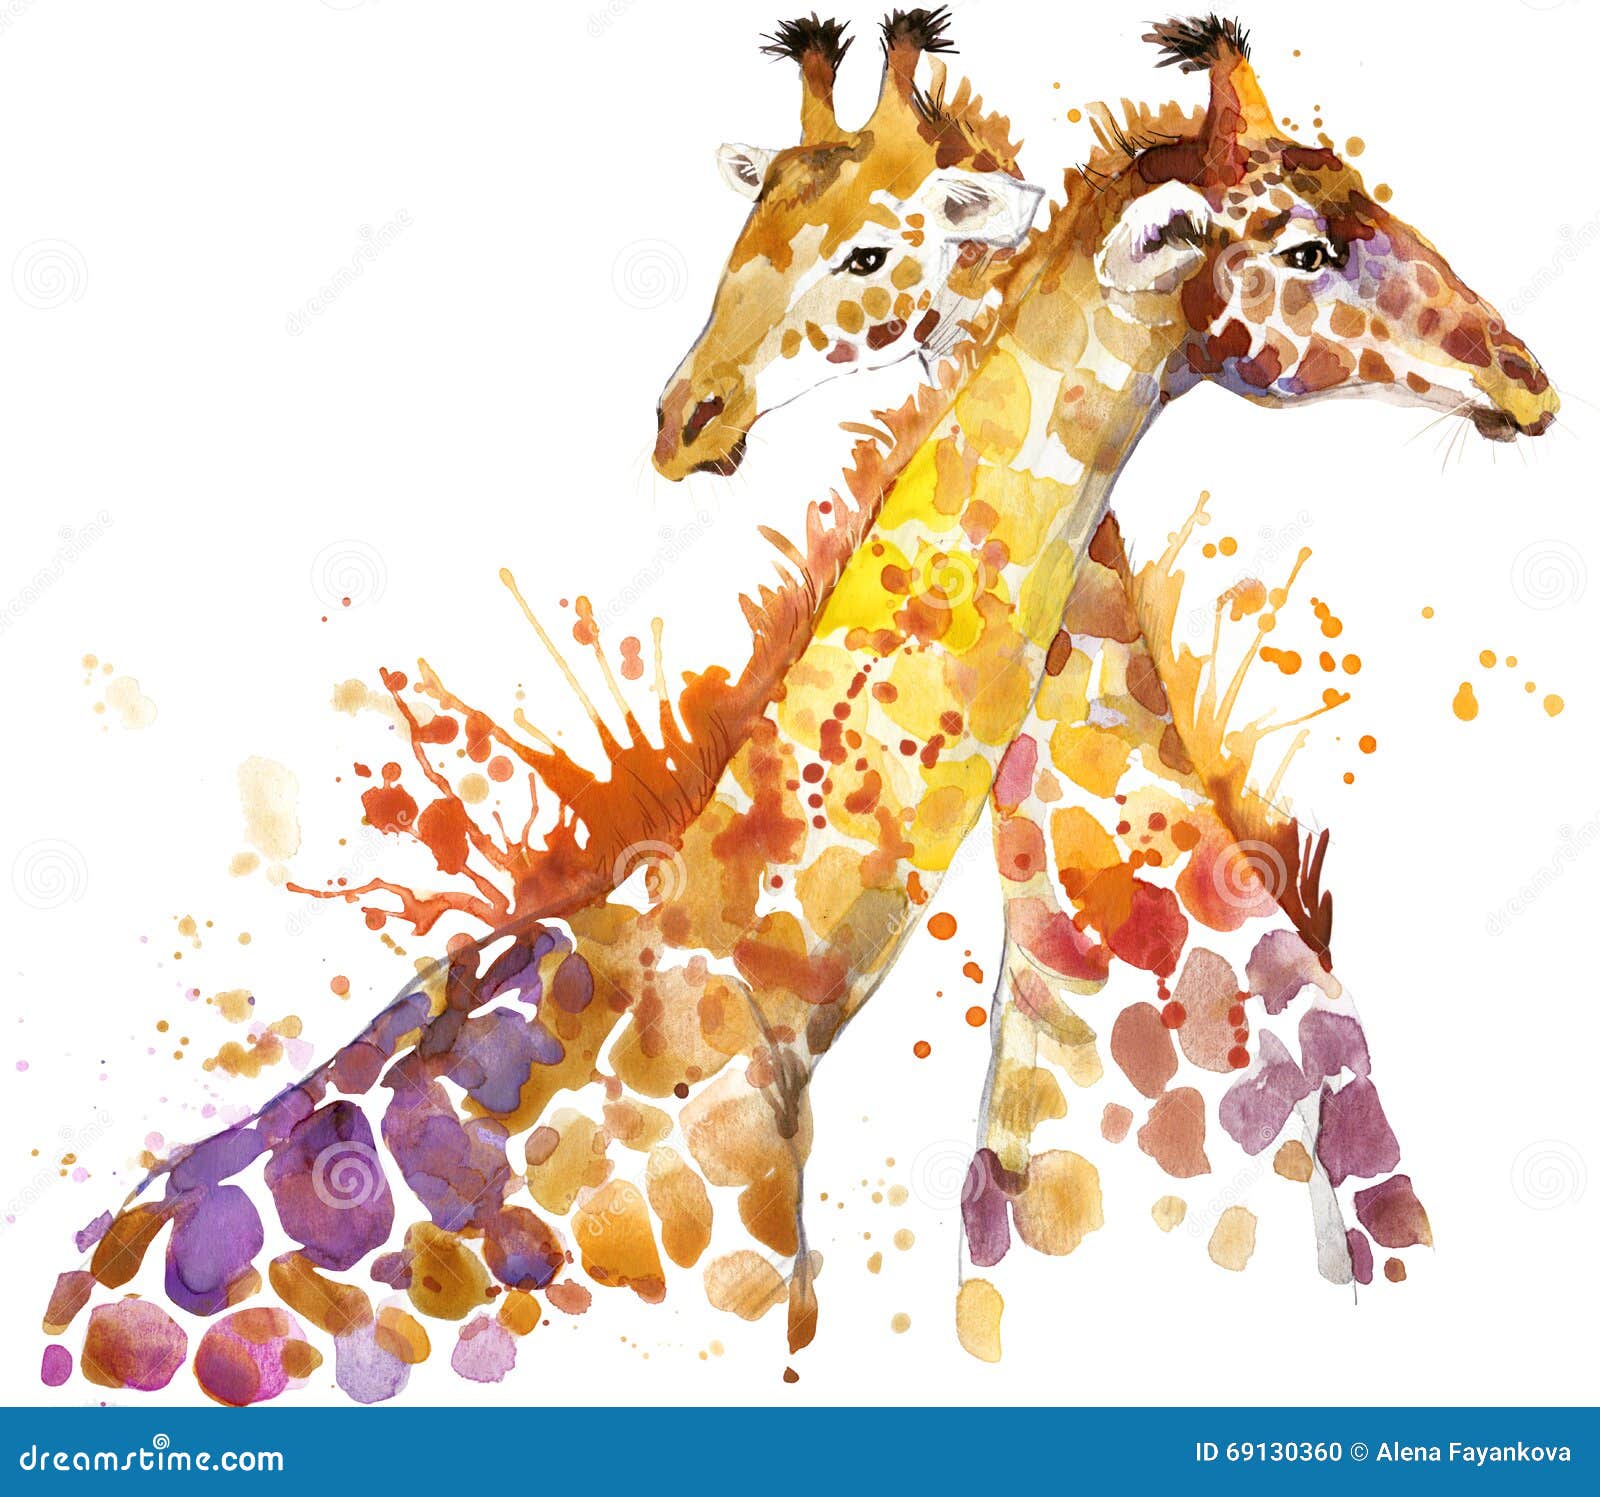 giraffe. giraffe  watercolor